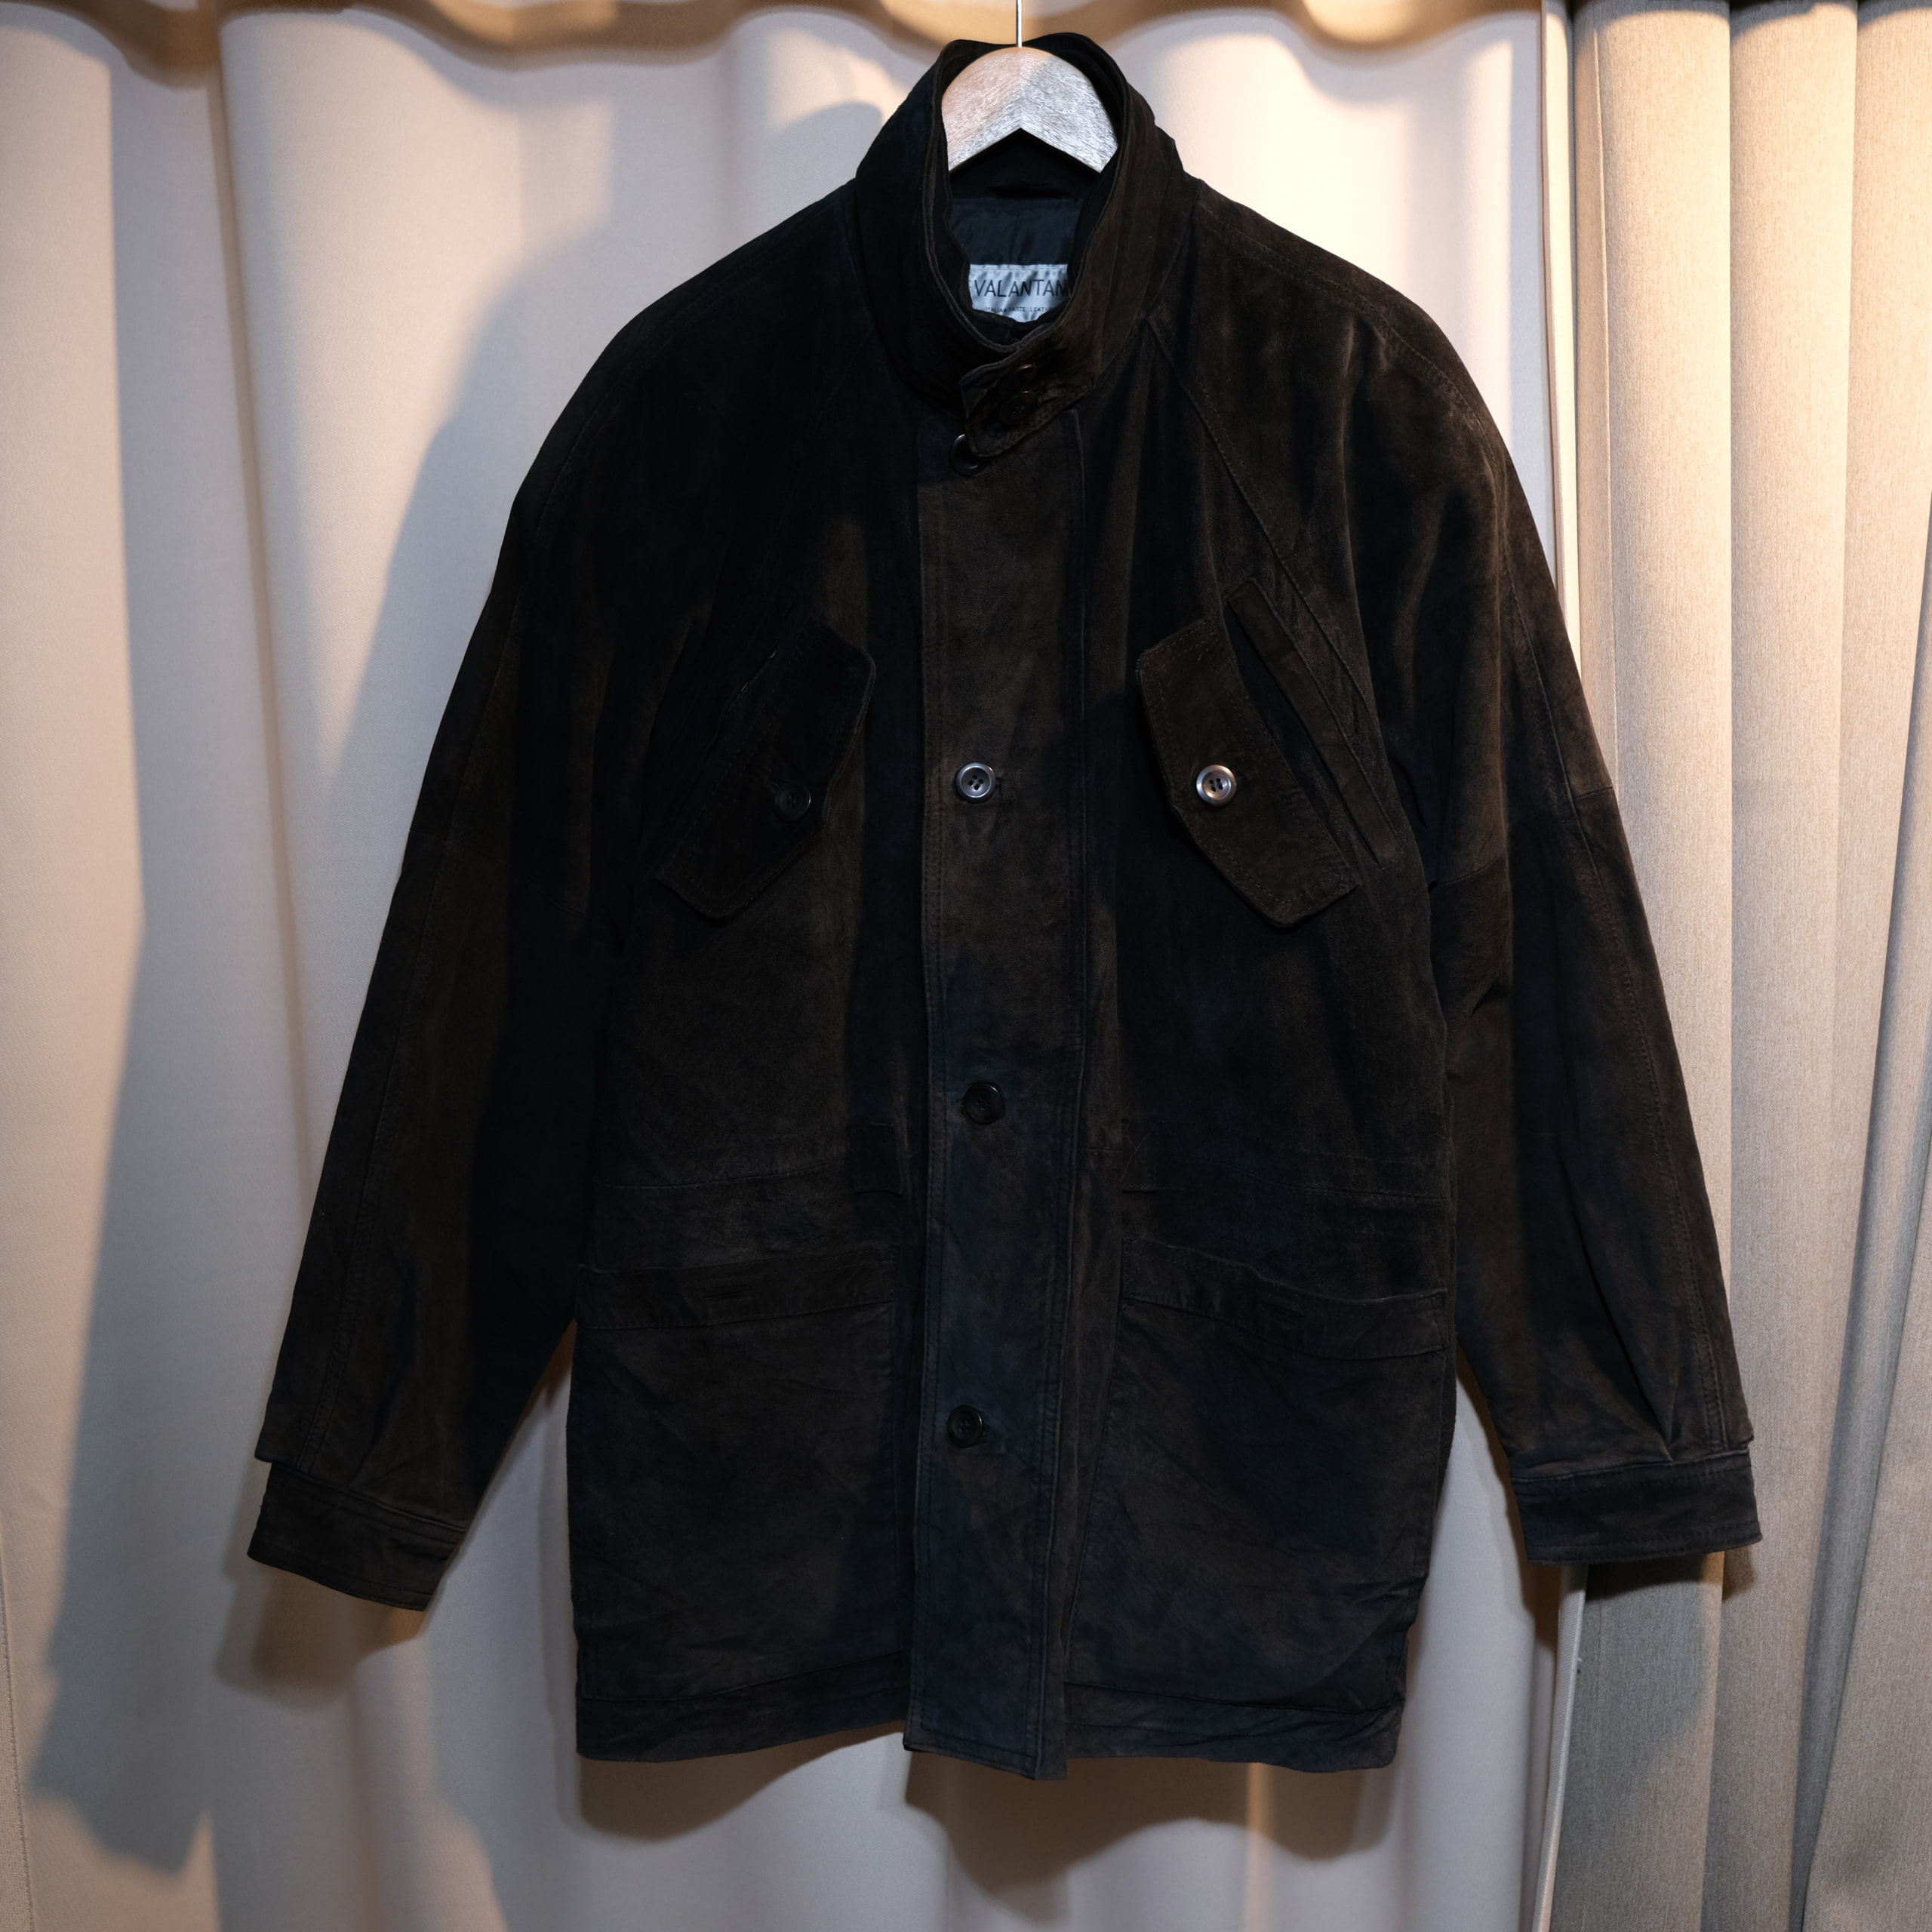 Vintage Suede Jacket